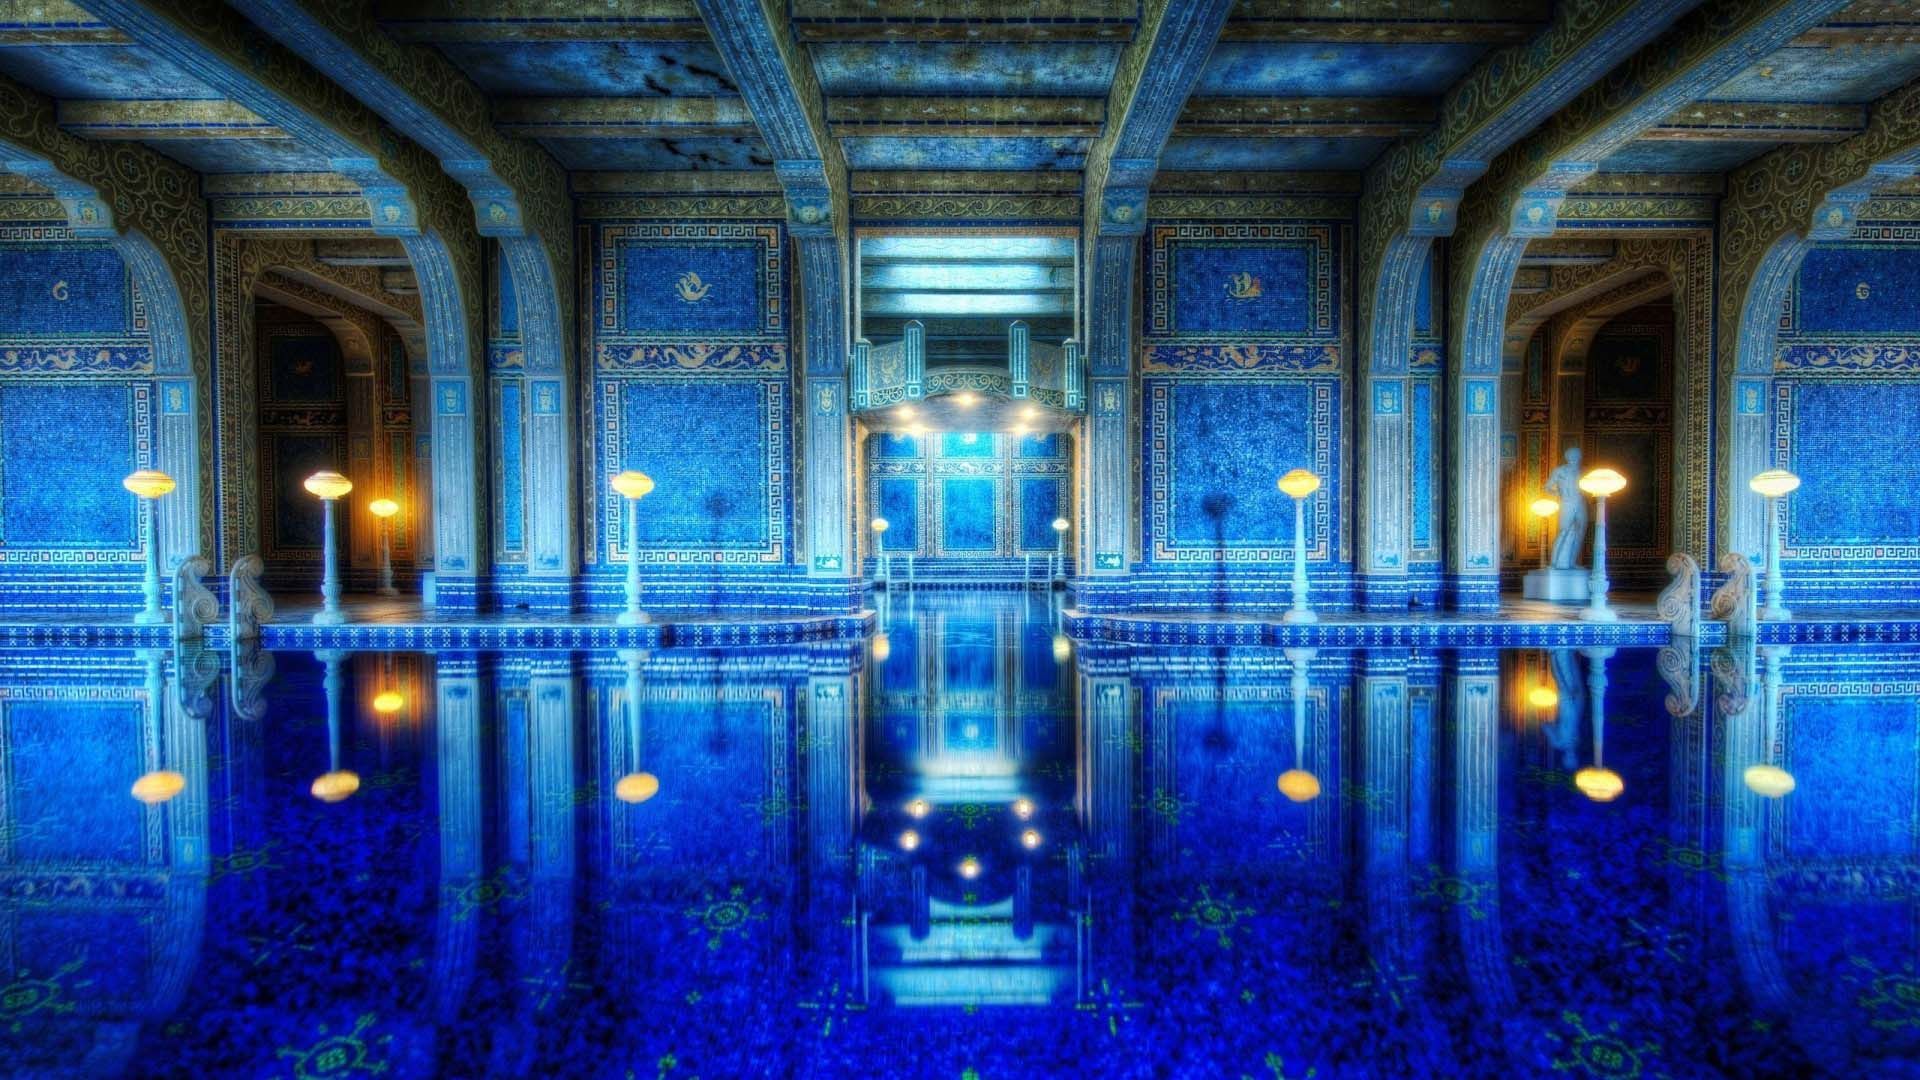 Beautiful Blue Mosque Interior - [1920x1080]